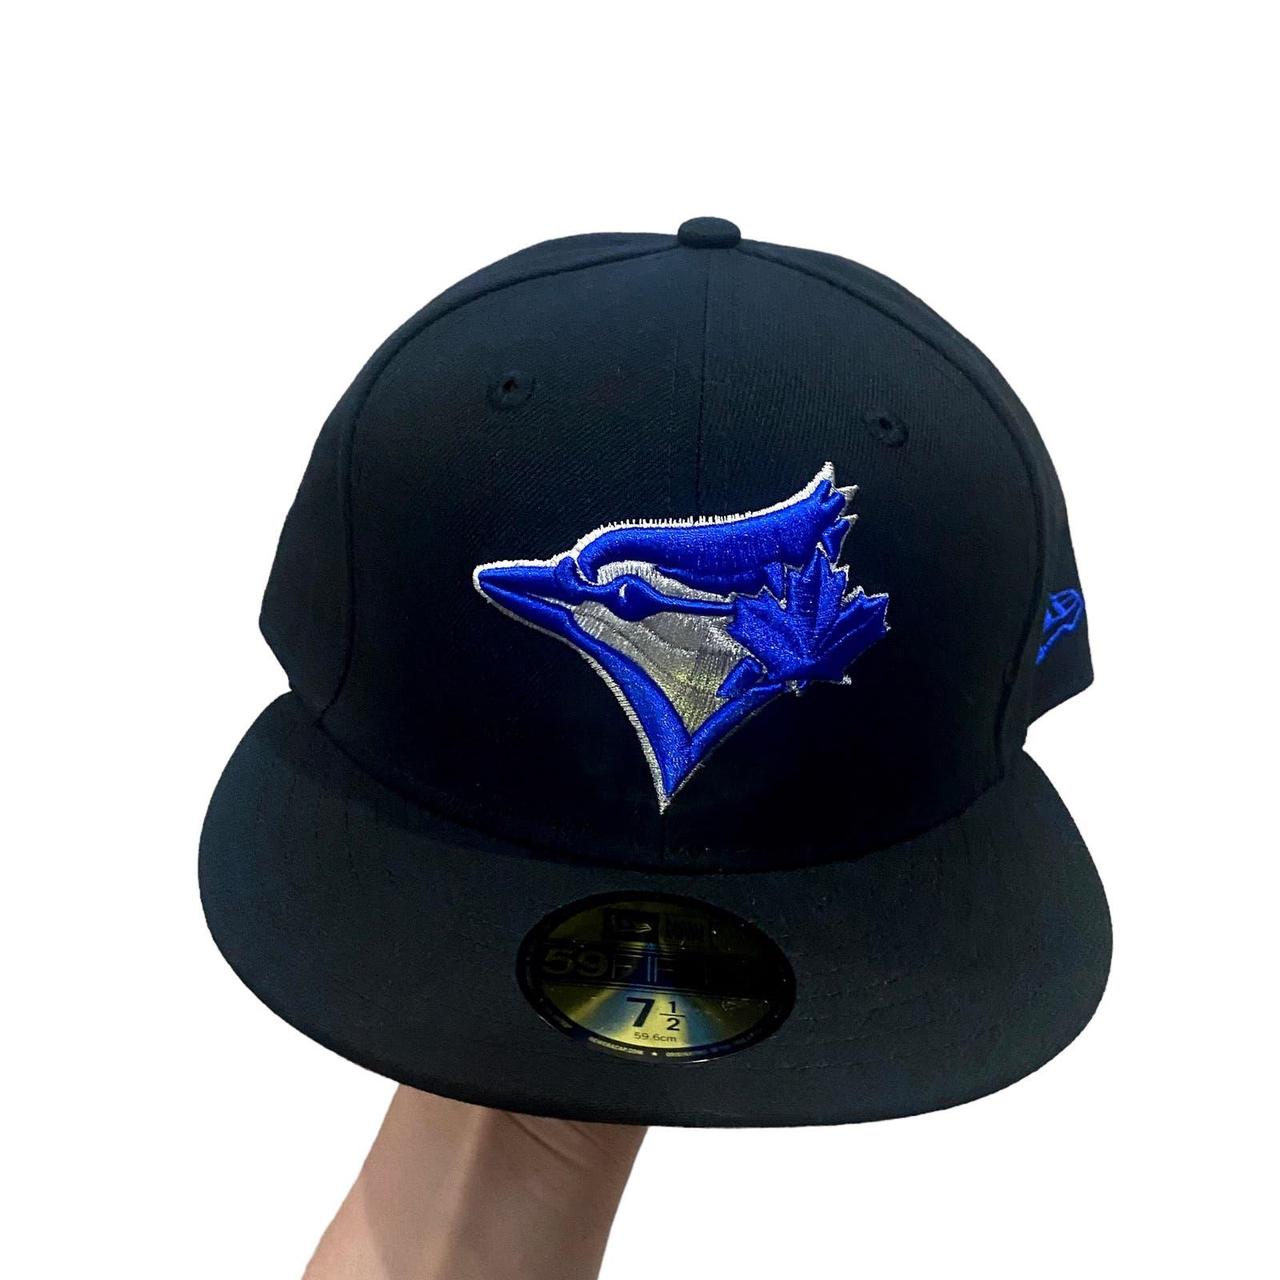 New Era Toronto blue jays fitted hat 7 1/2 brand new - Depop